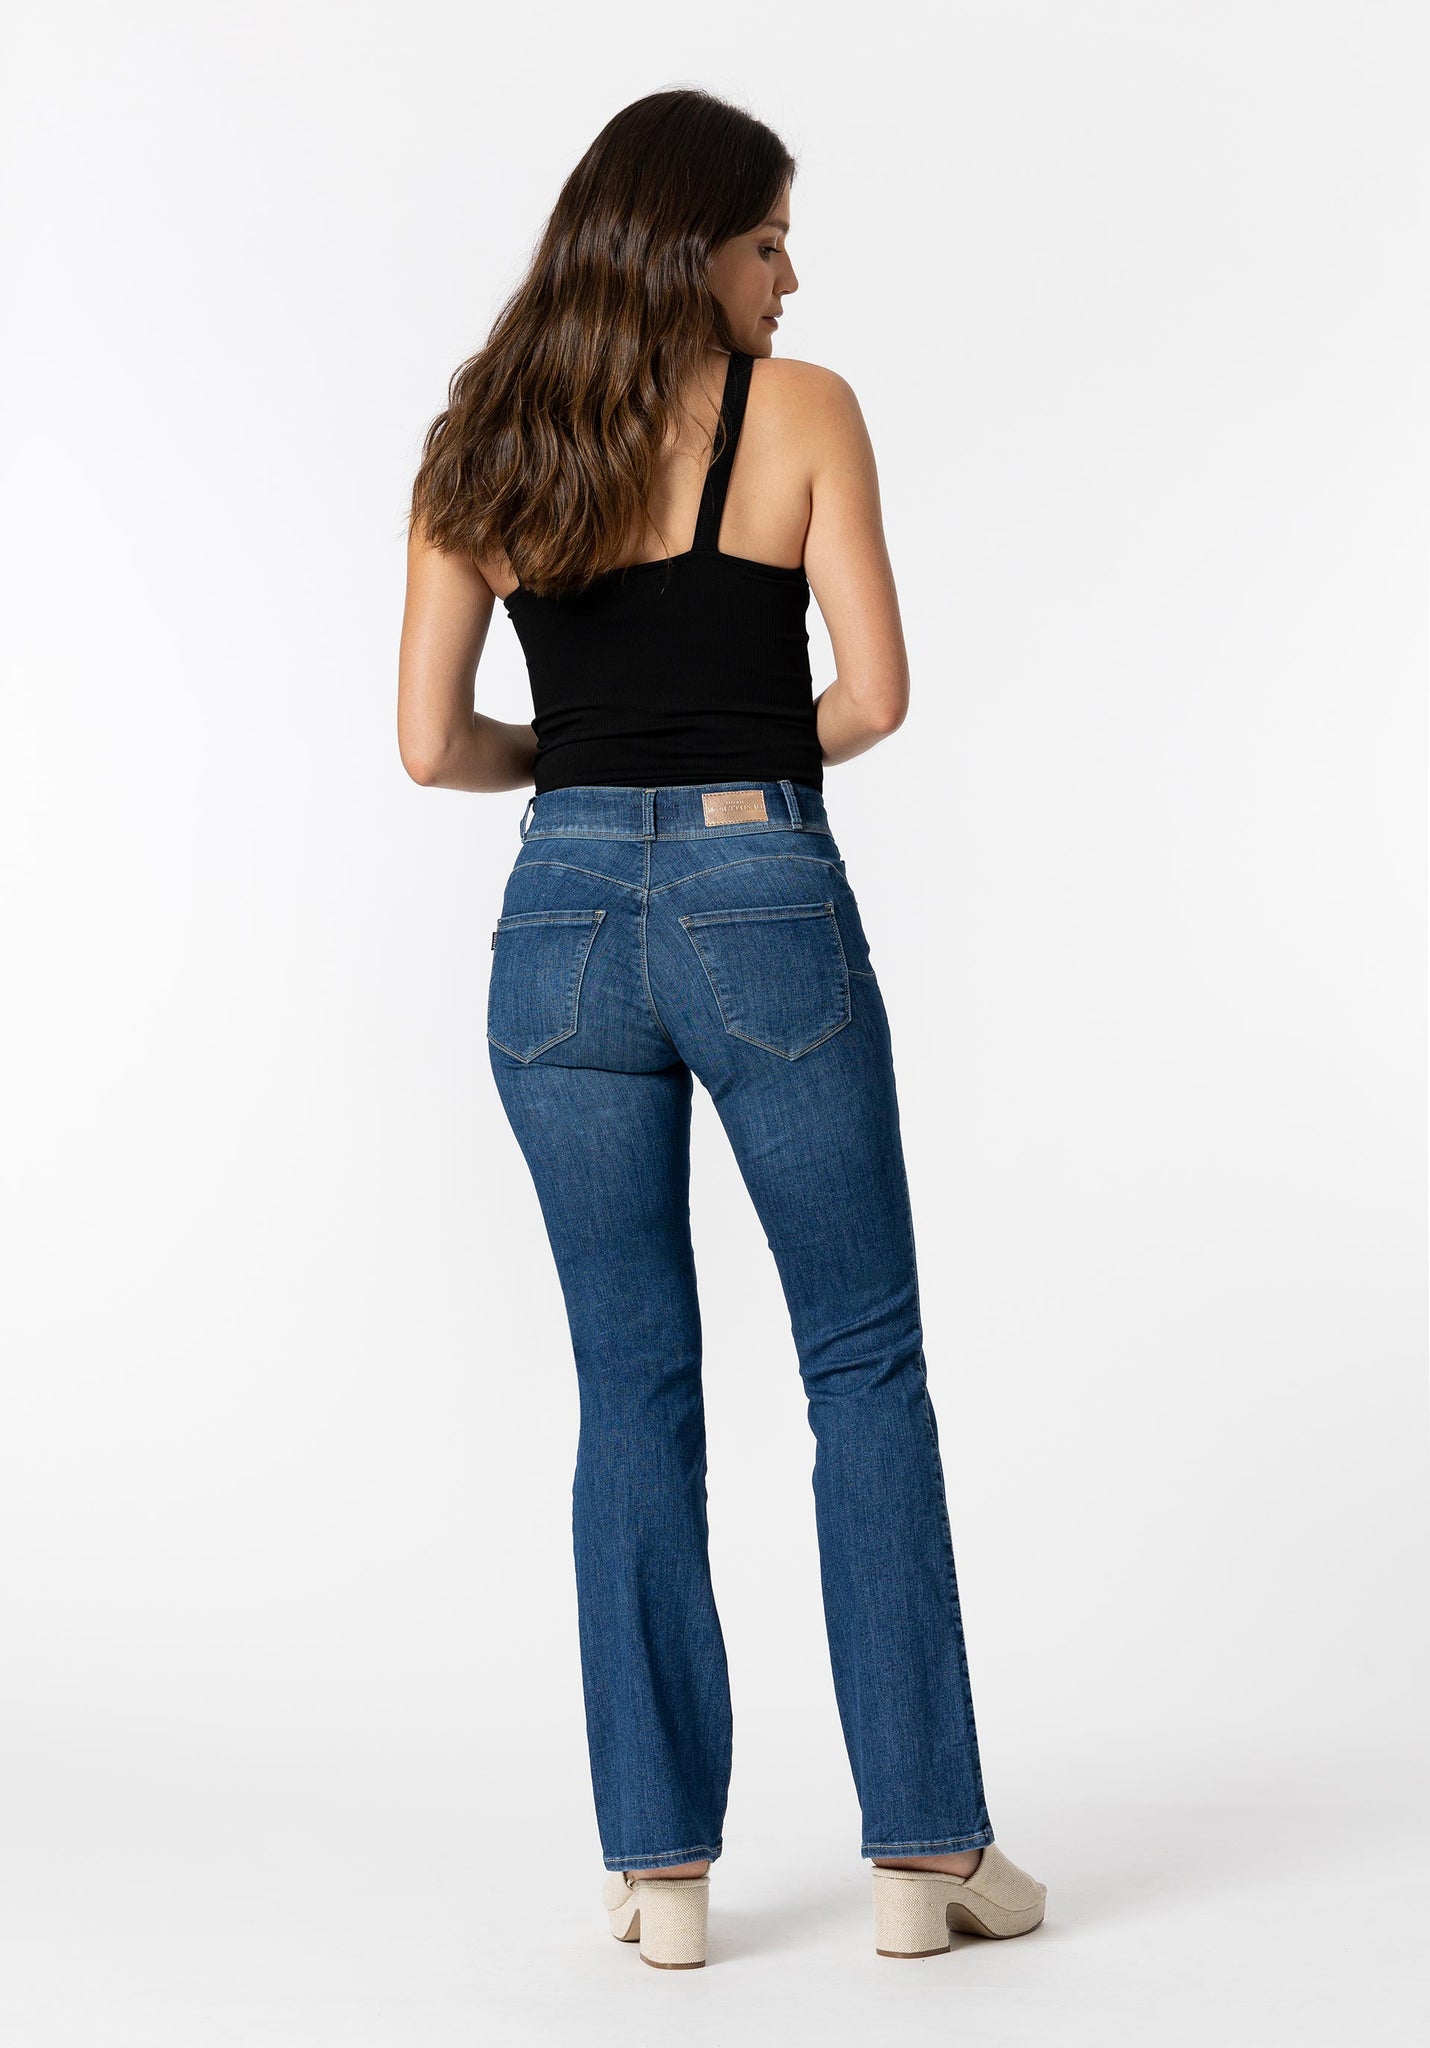 Tiffosi Silhouette Jeans, Einheitsgröße, mittlerer Ton